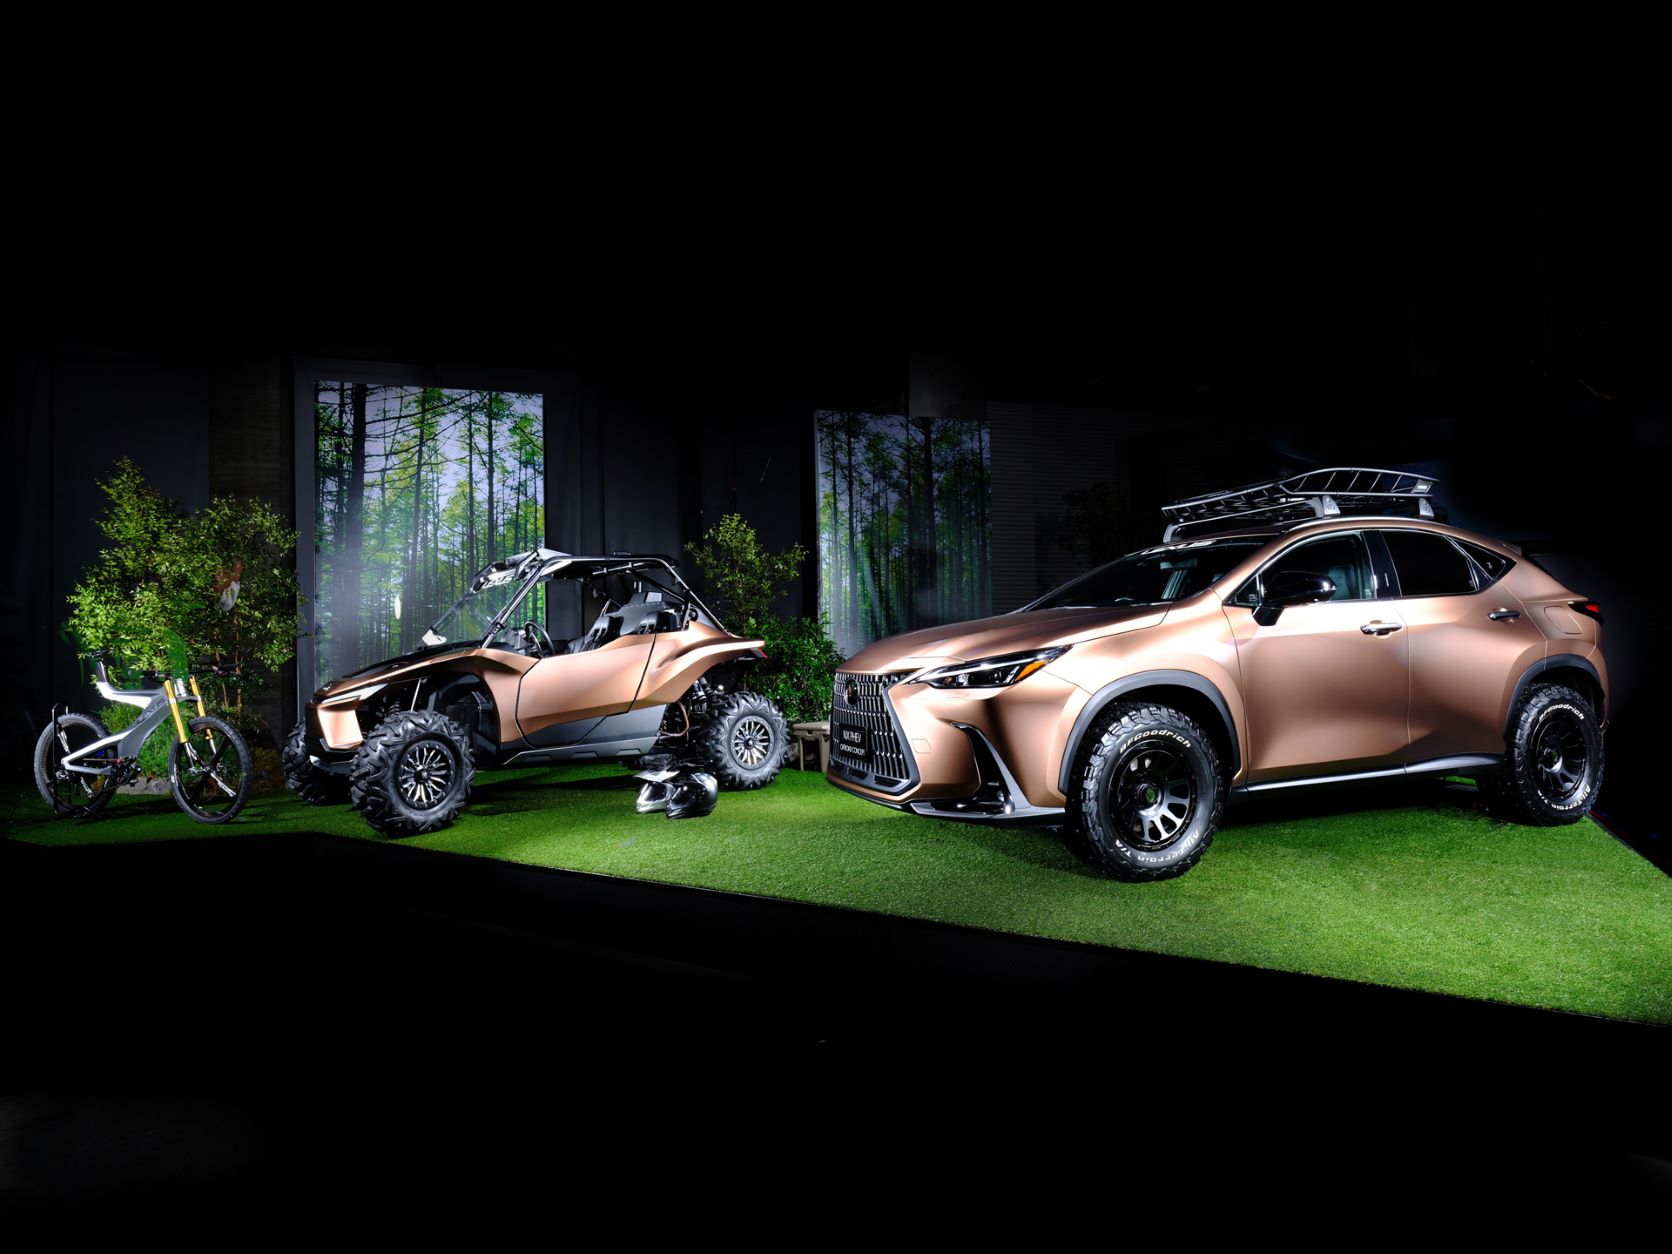 Lexus' Off-road concepts